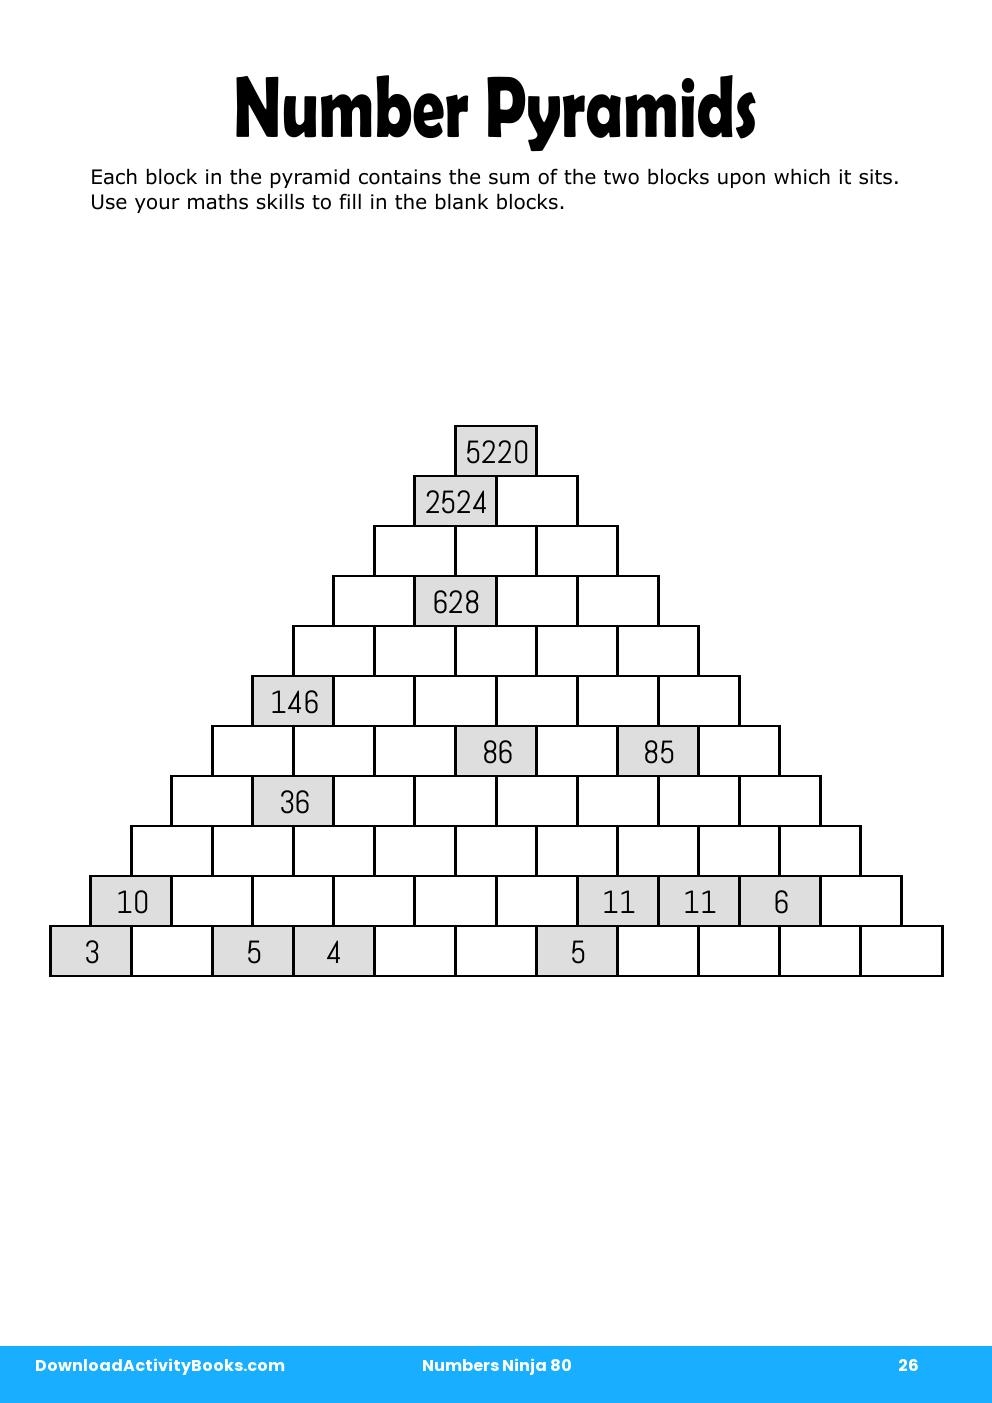 Number Pyramids in Numbers Ninja 80